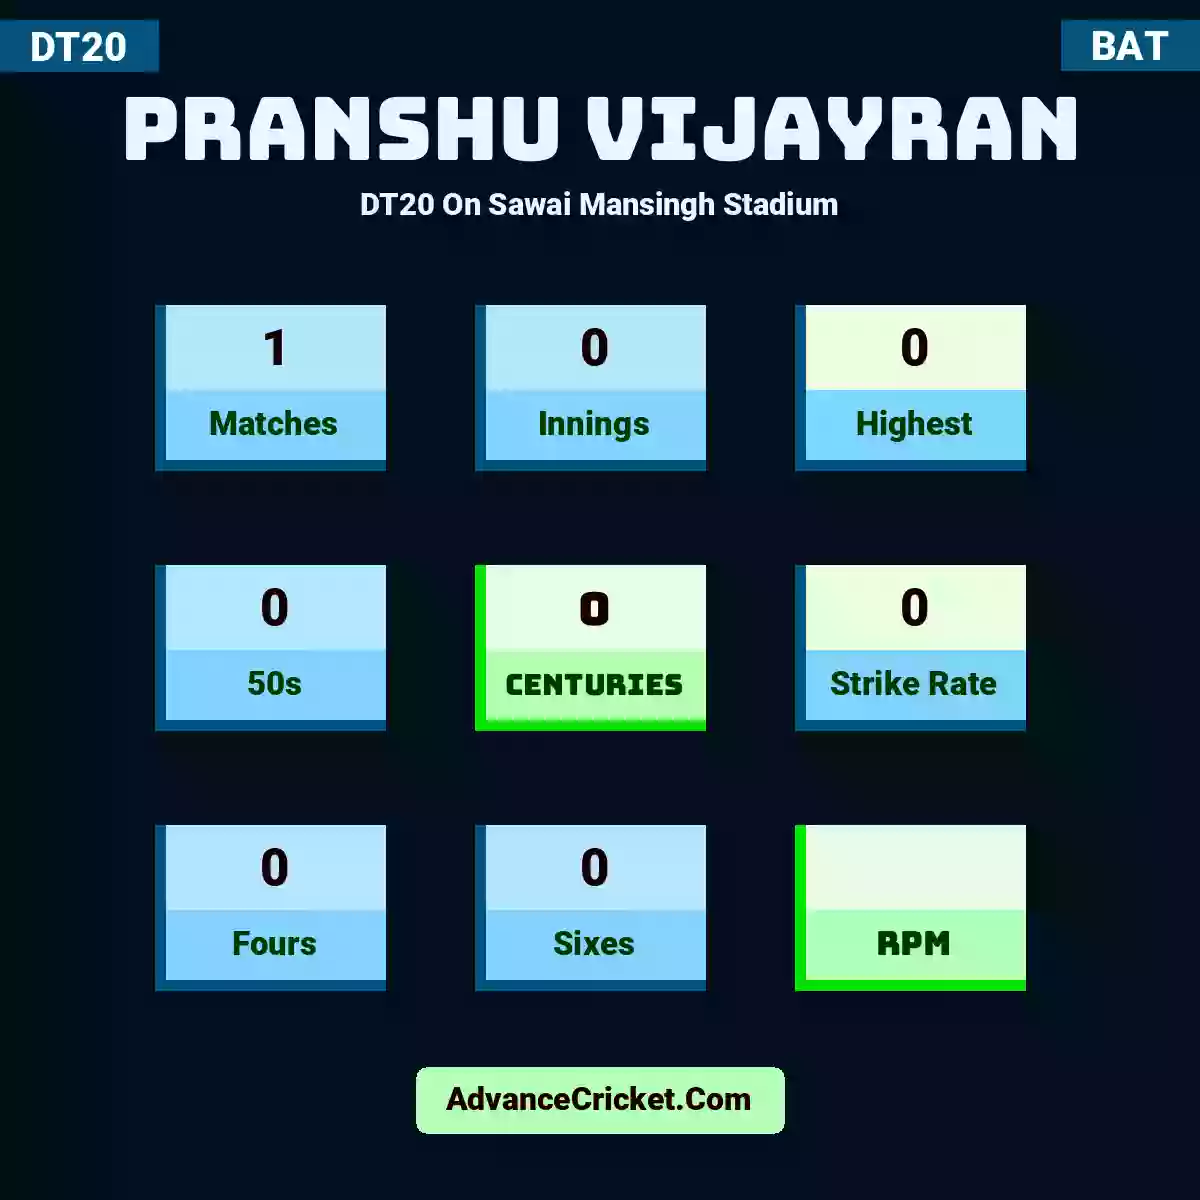 Pranshu Vijayran DT20  On Sawai Mansingh Stadium, Pranshu Vijayran played 1 matches, scored 0 runs as highest, 0 half-centuries, and 0 centuries, with a strike rate of 0. P.Vijayran hit 0 fours and 0 sixes.